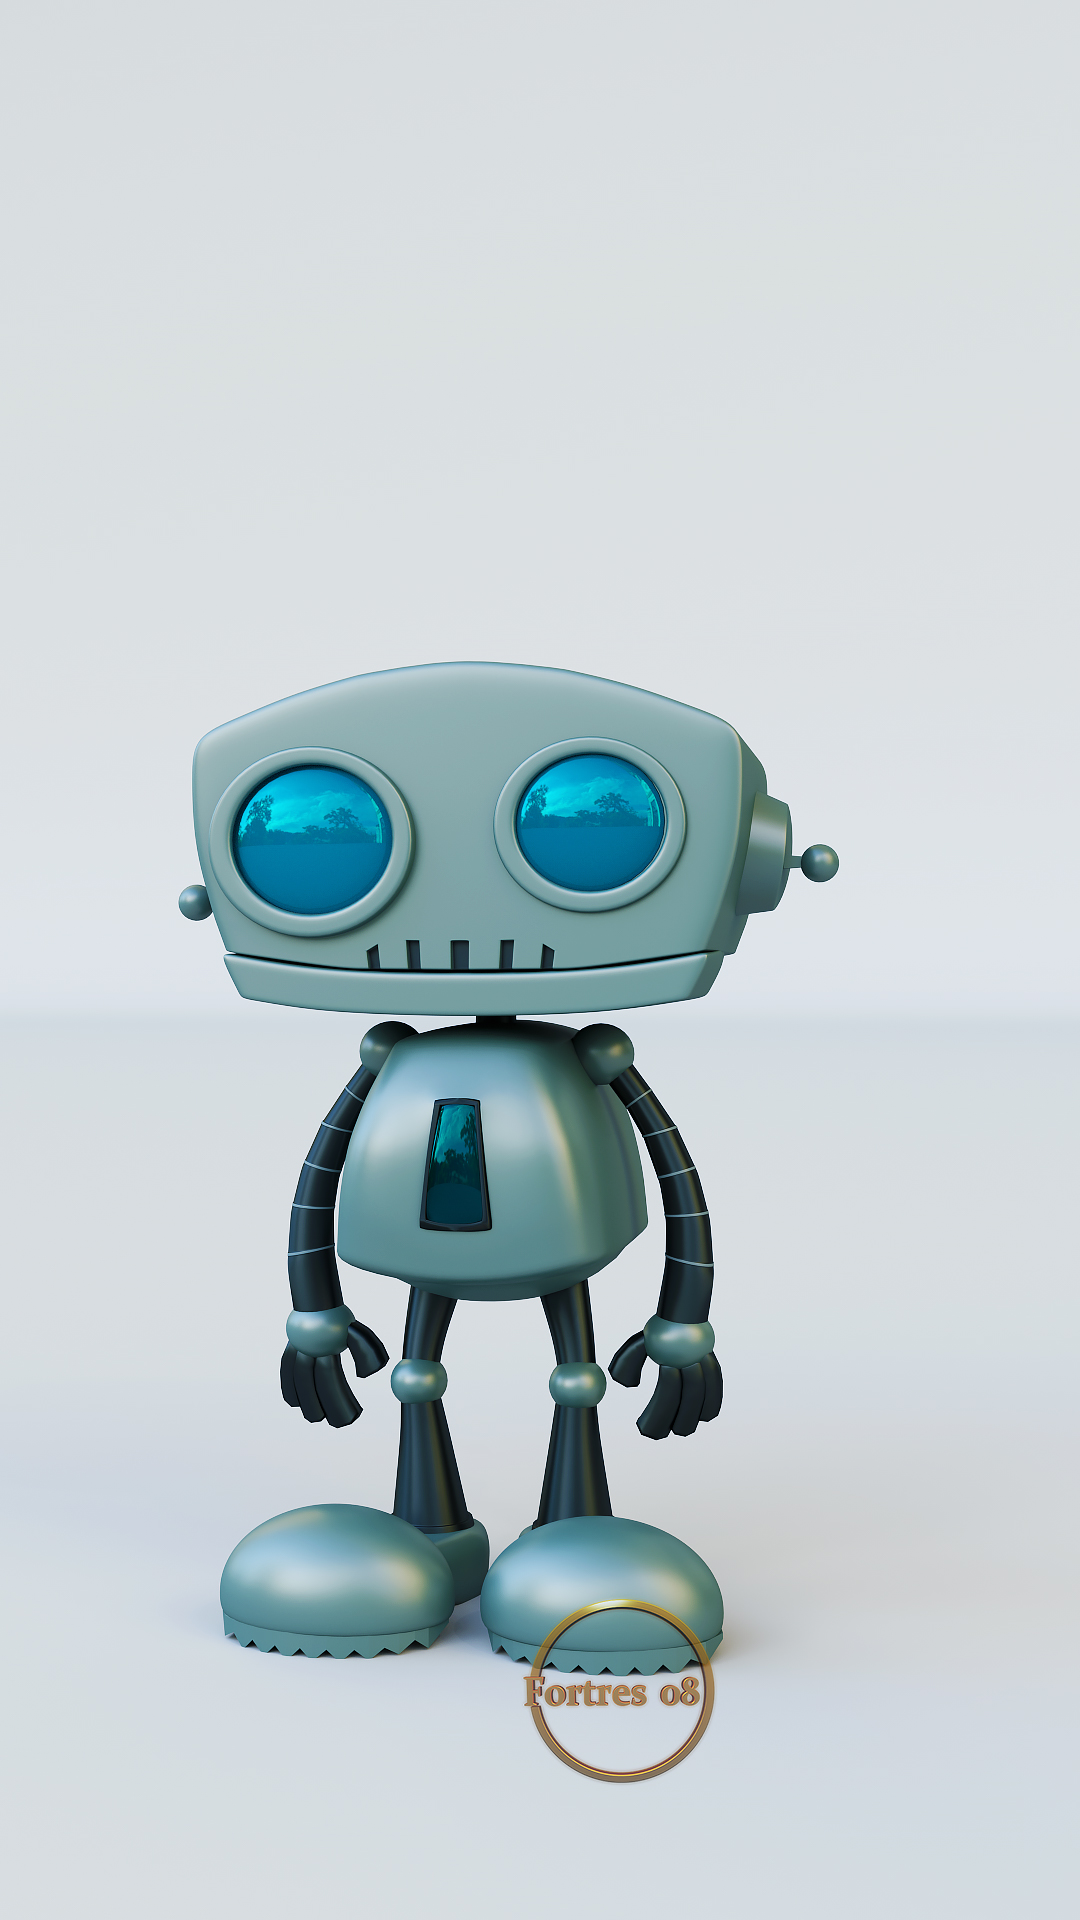 Blue Eyes Robot by fredd008 on DeviantArt